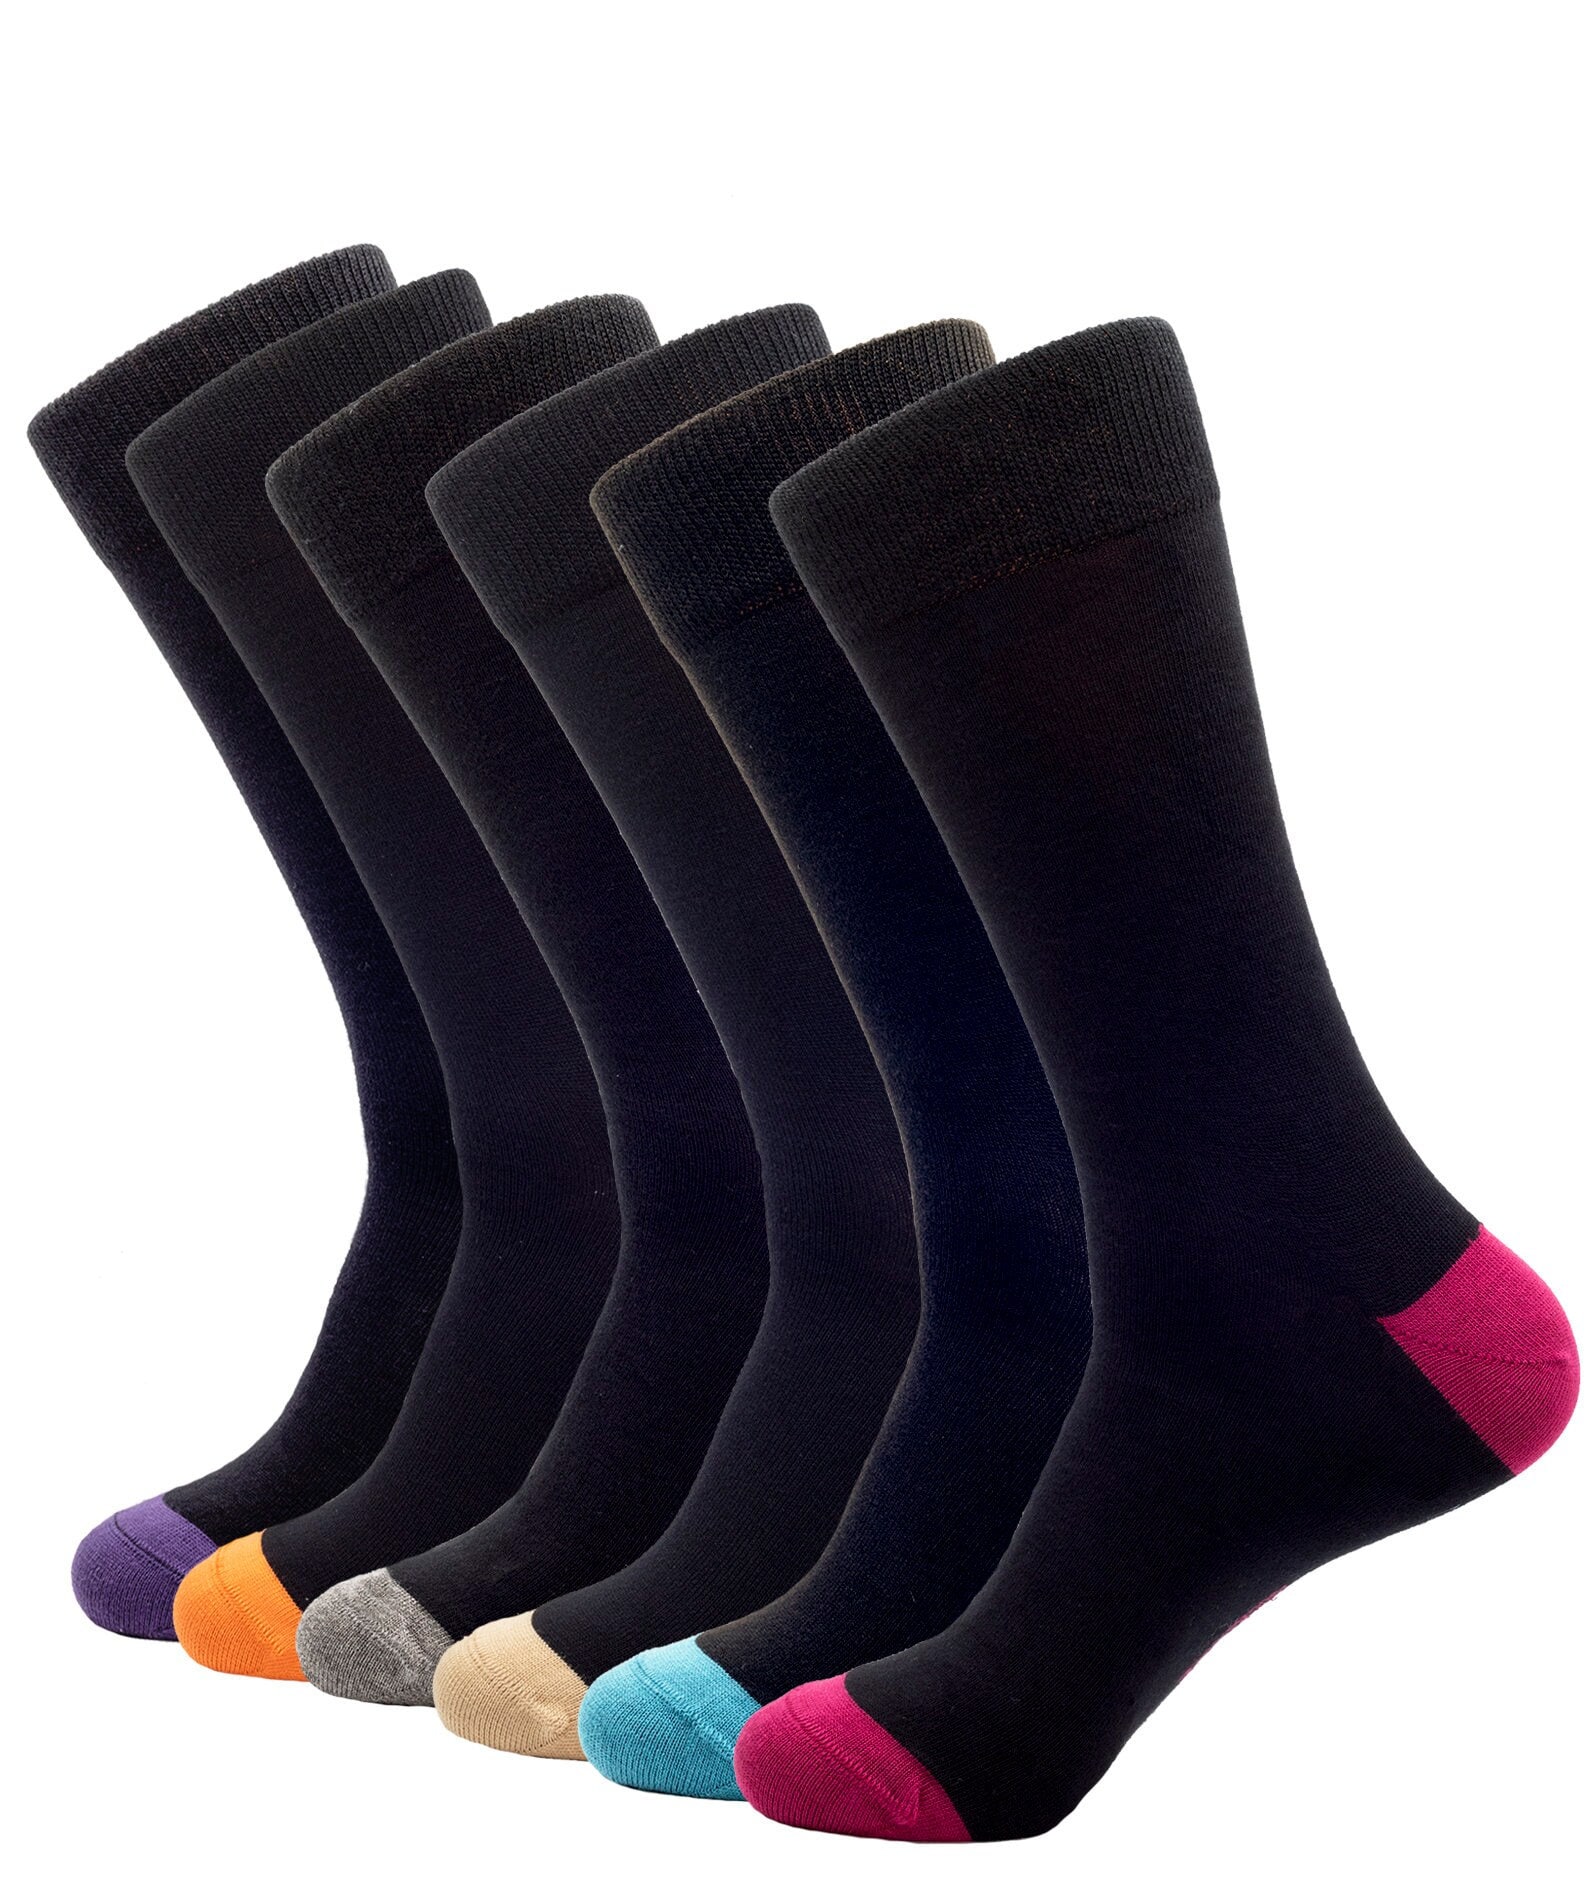 1SOCK2SOCK Men's 6 Pack Bamboo Blend Thin Crew Socks, Super Soft,  Breathable, Colorful Dress Socks -  Canada